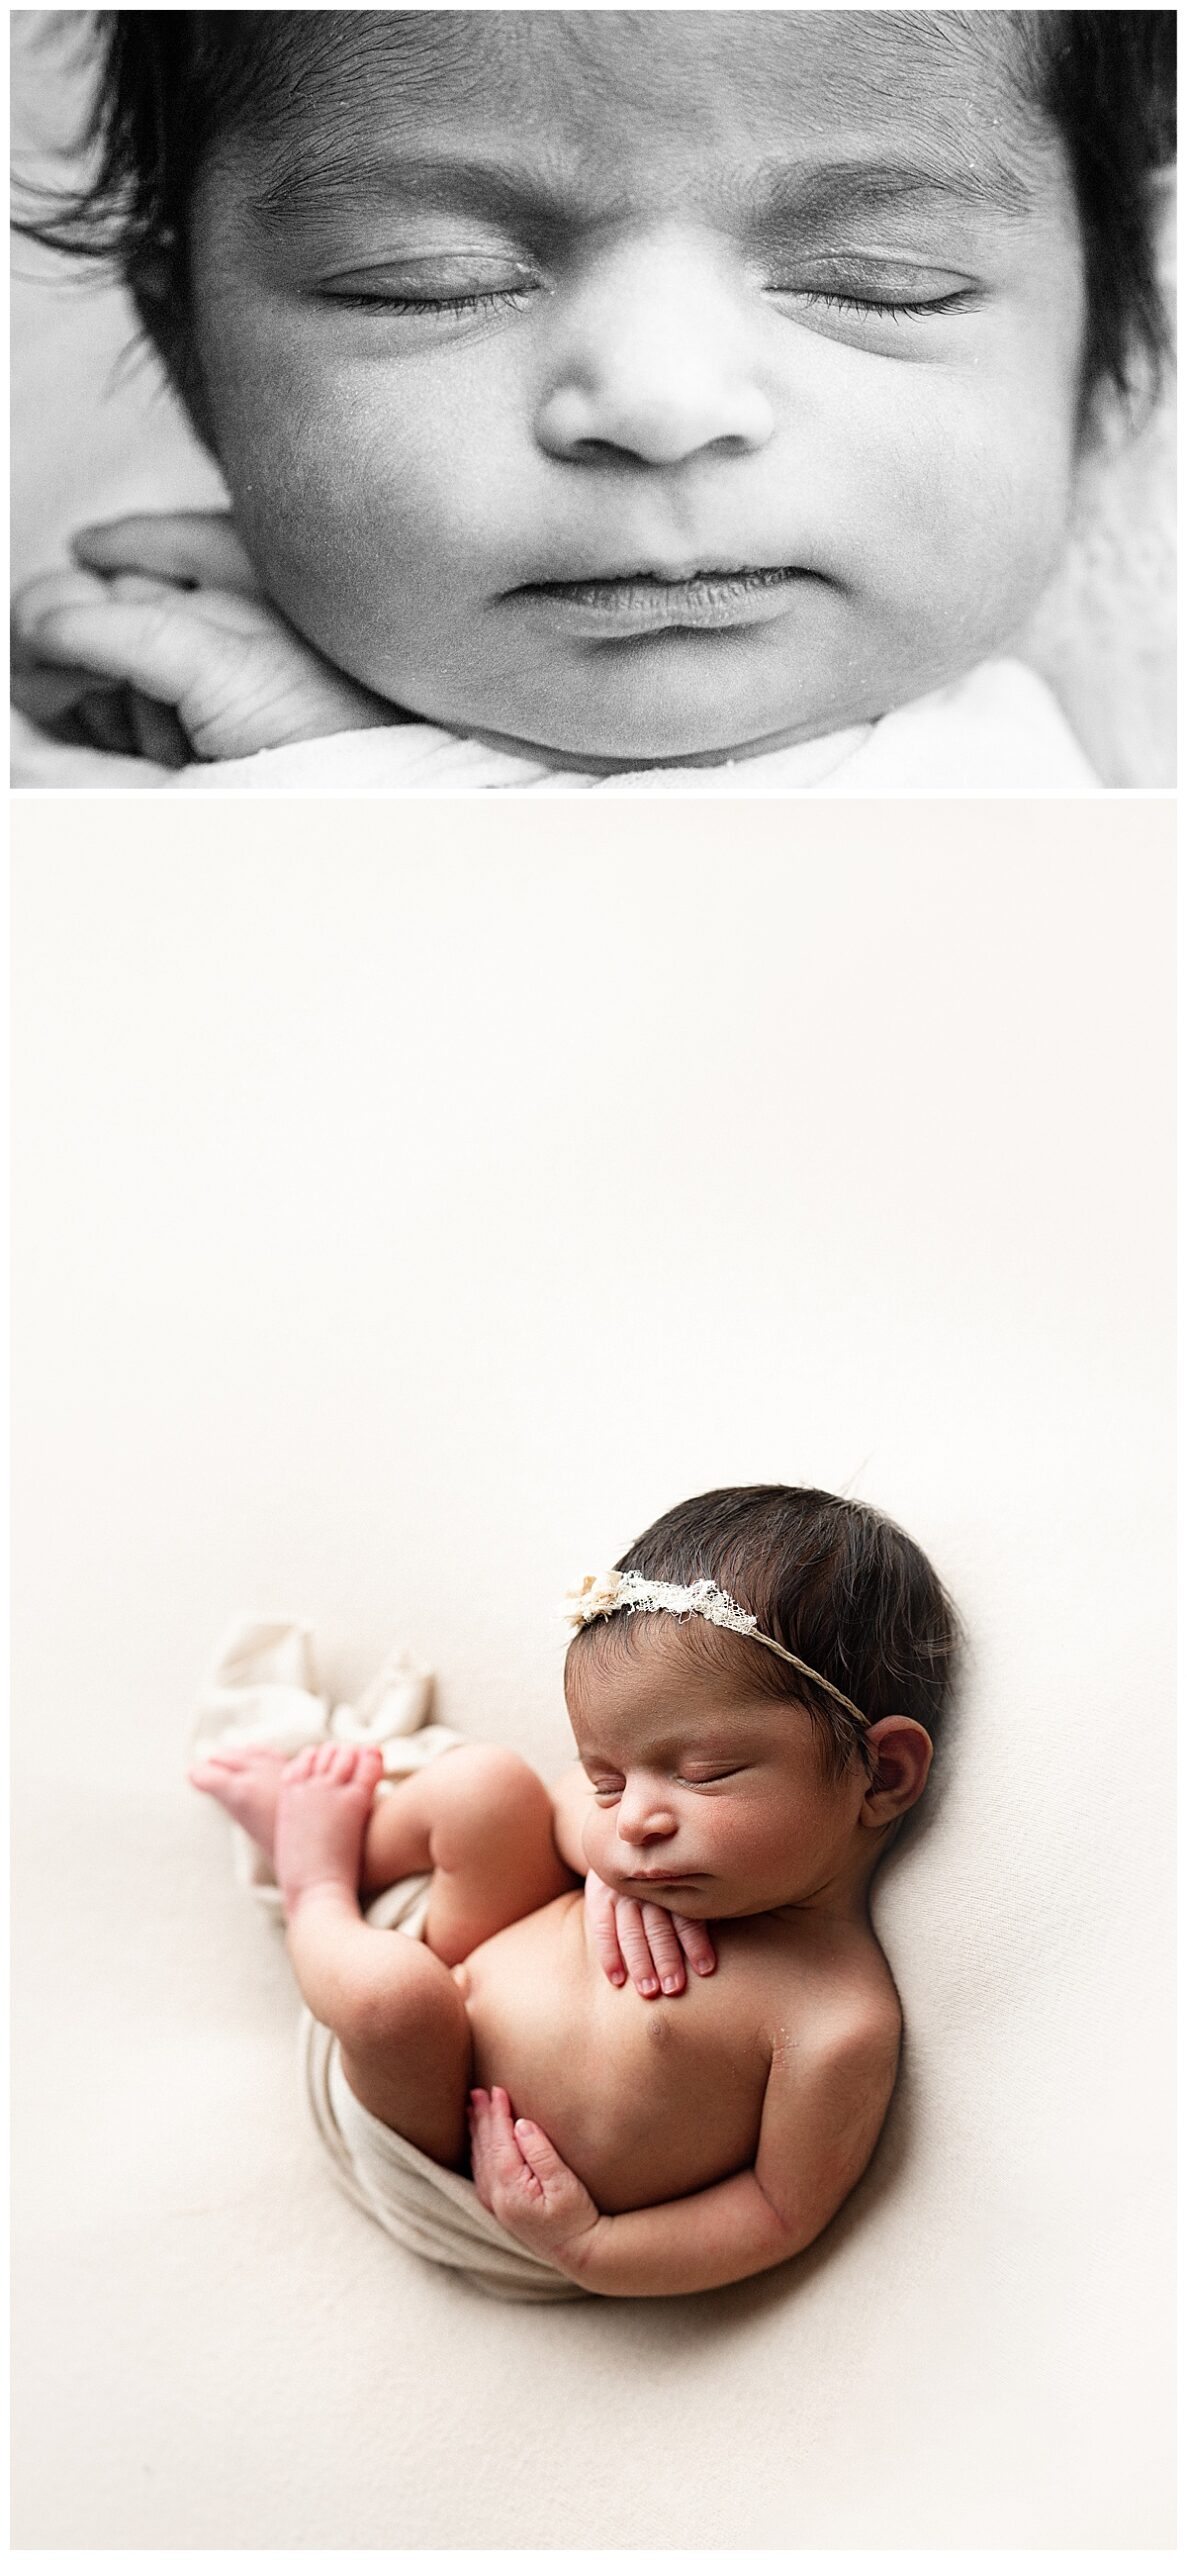 Newborn sleeps calmly on white blanket for Norma Fayak Photography